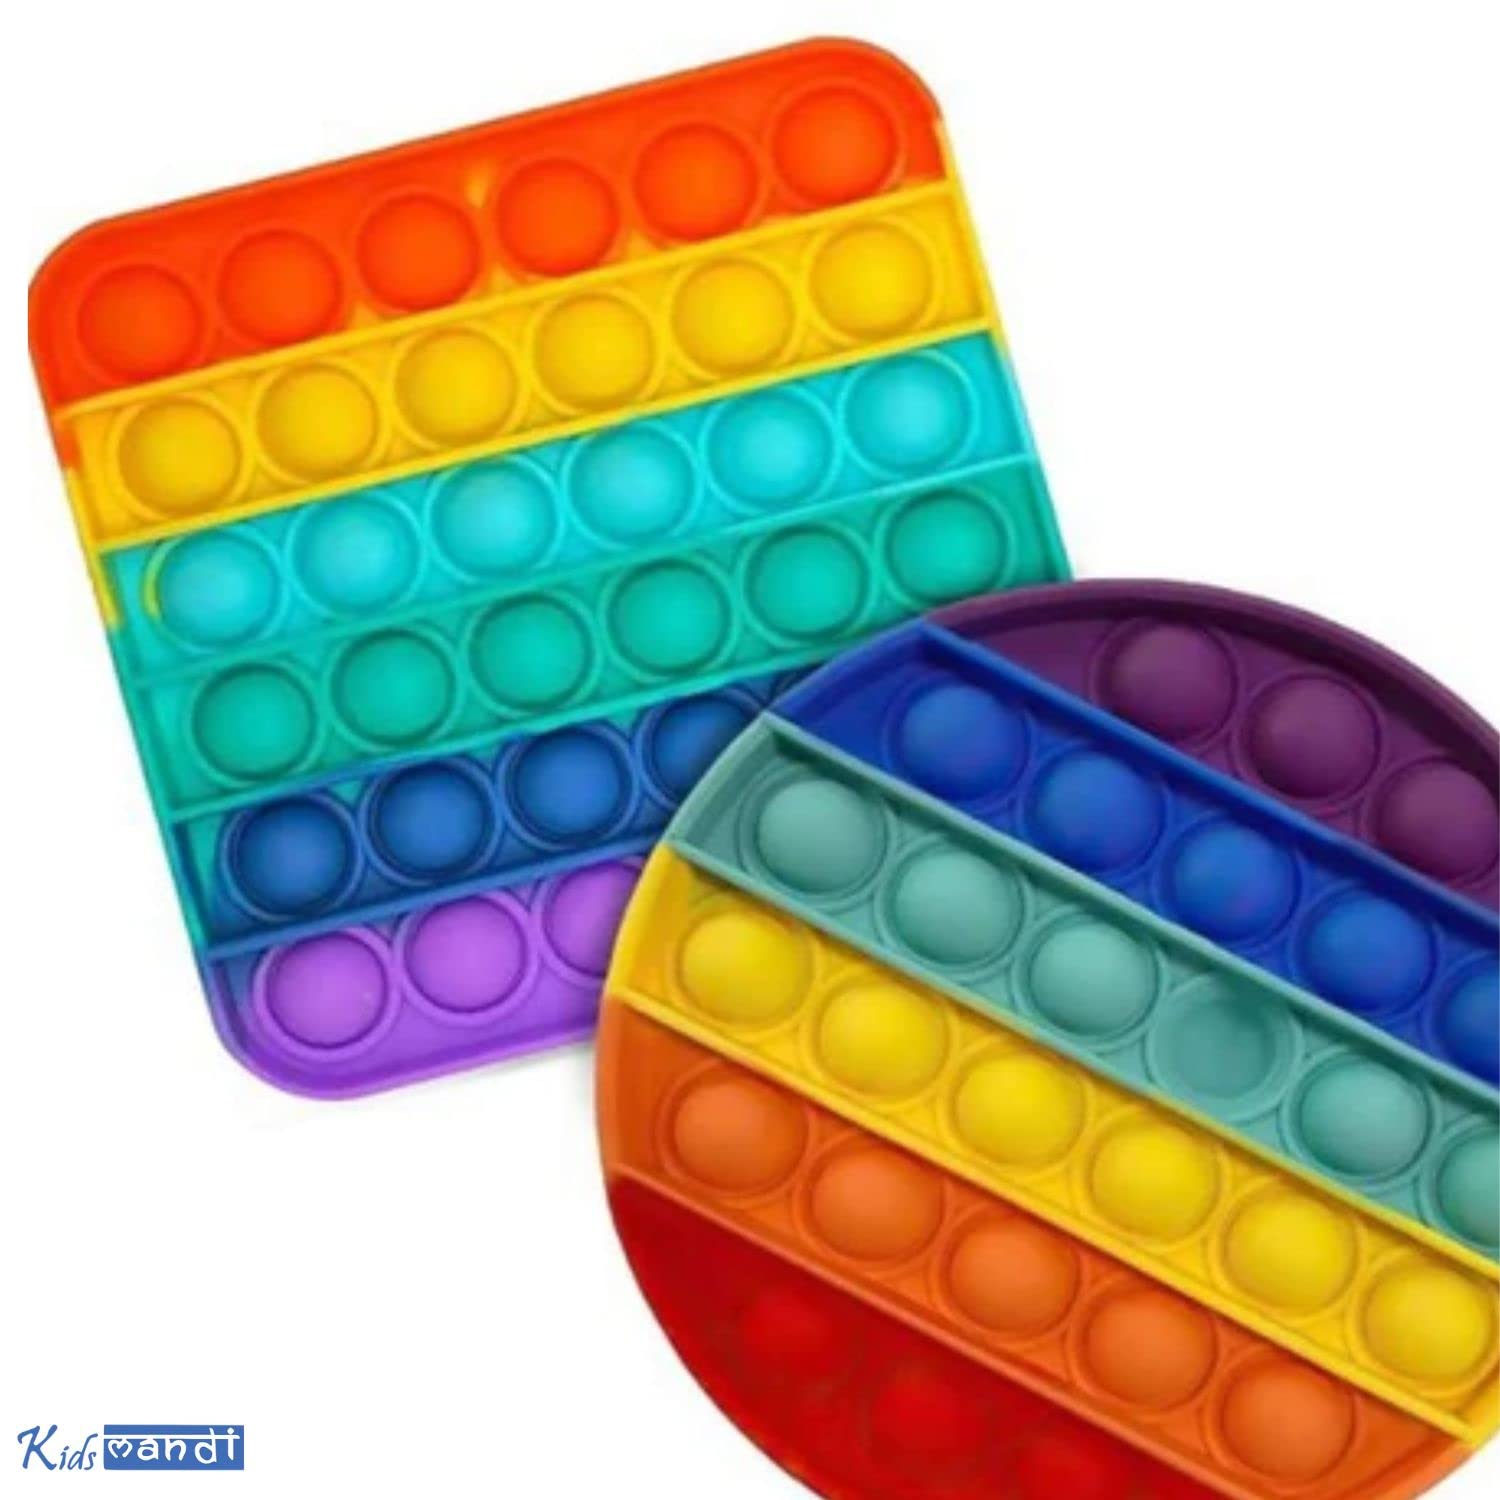 KIDS MANDI rainbow fidget pop-it toy pack squeeze stress-reliever.